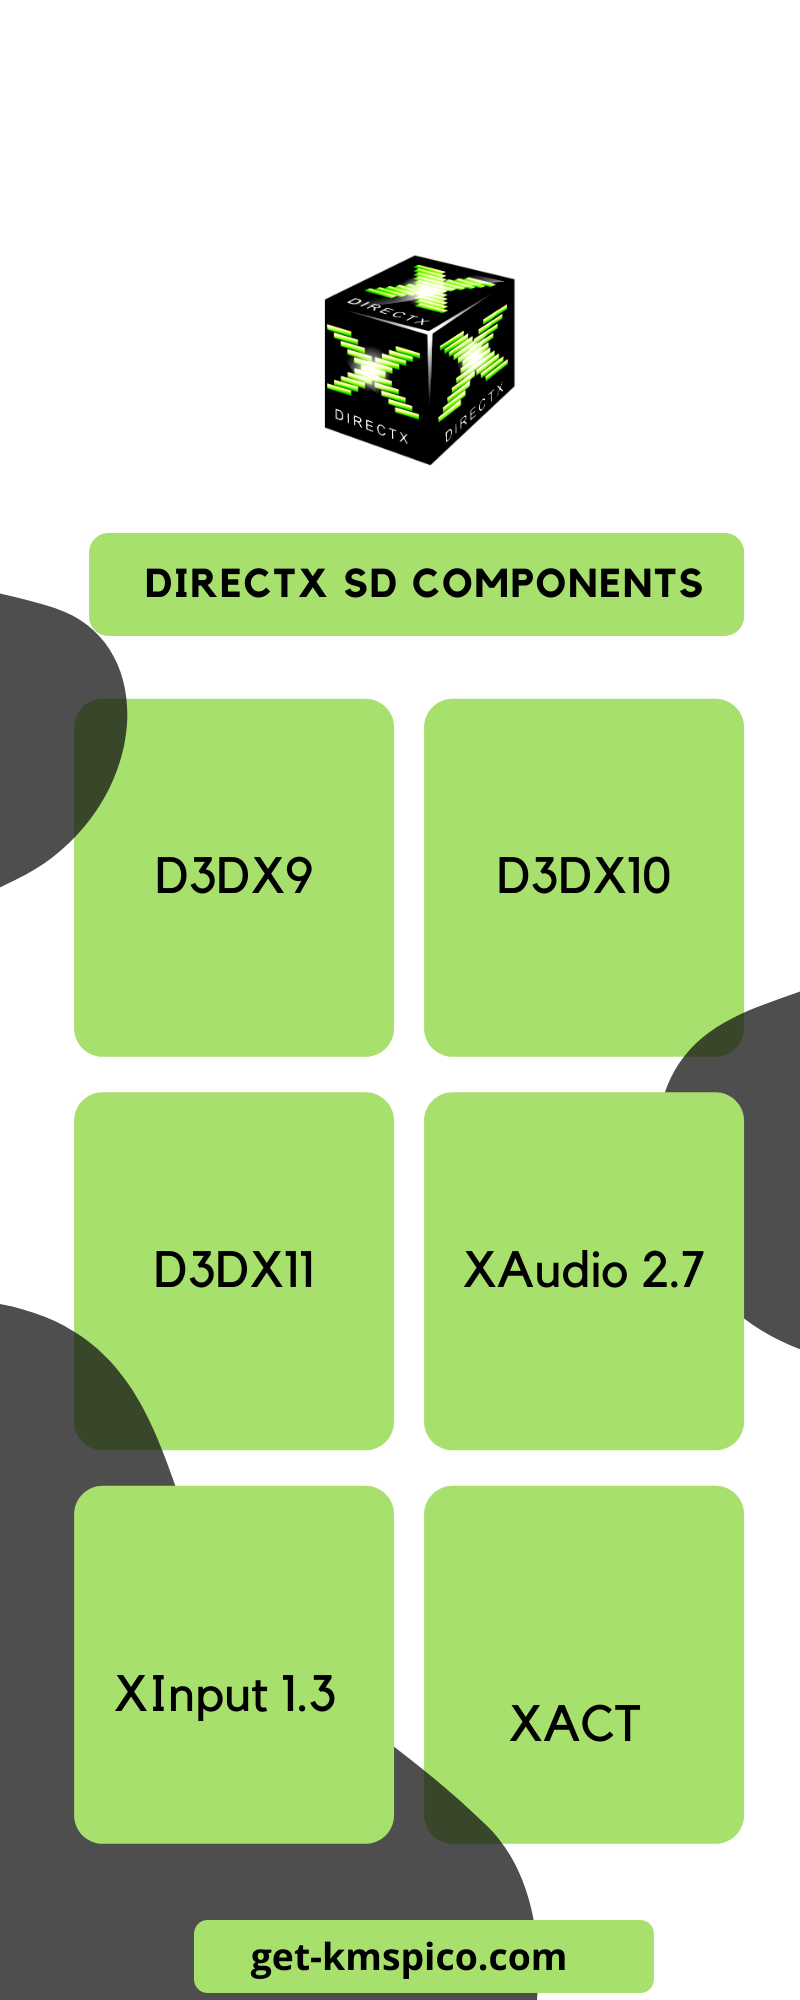 DirectX-Infographic